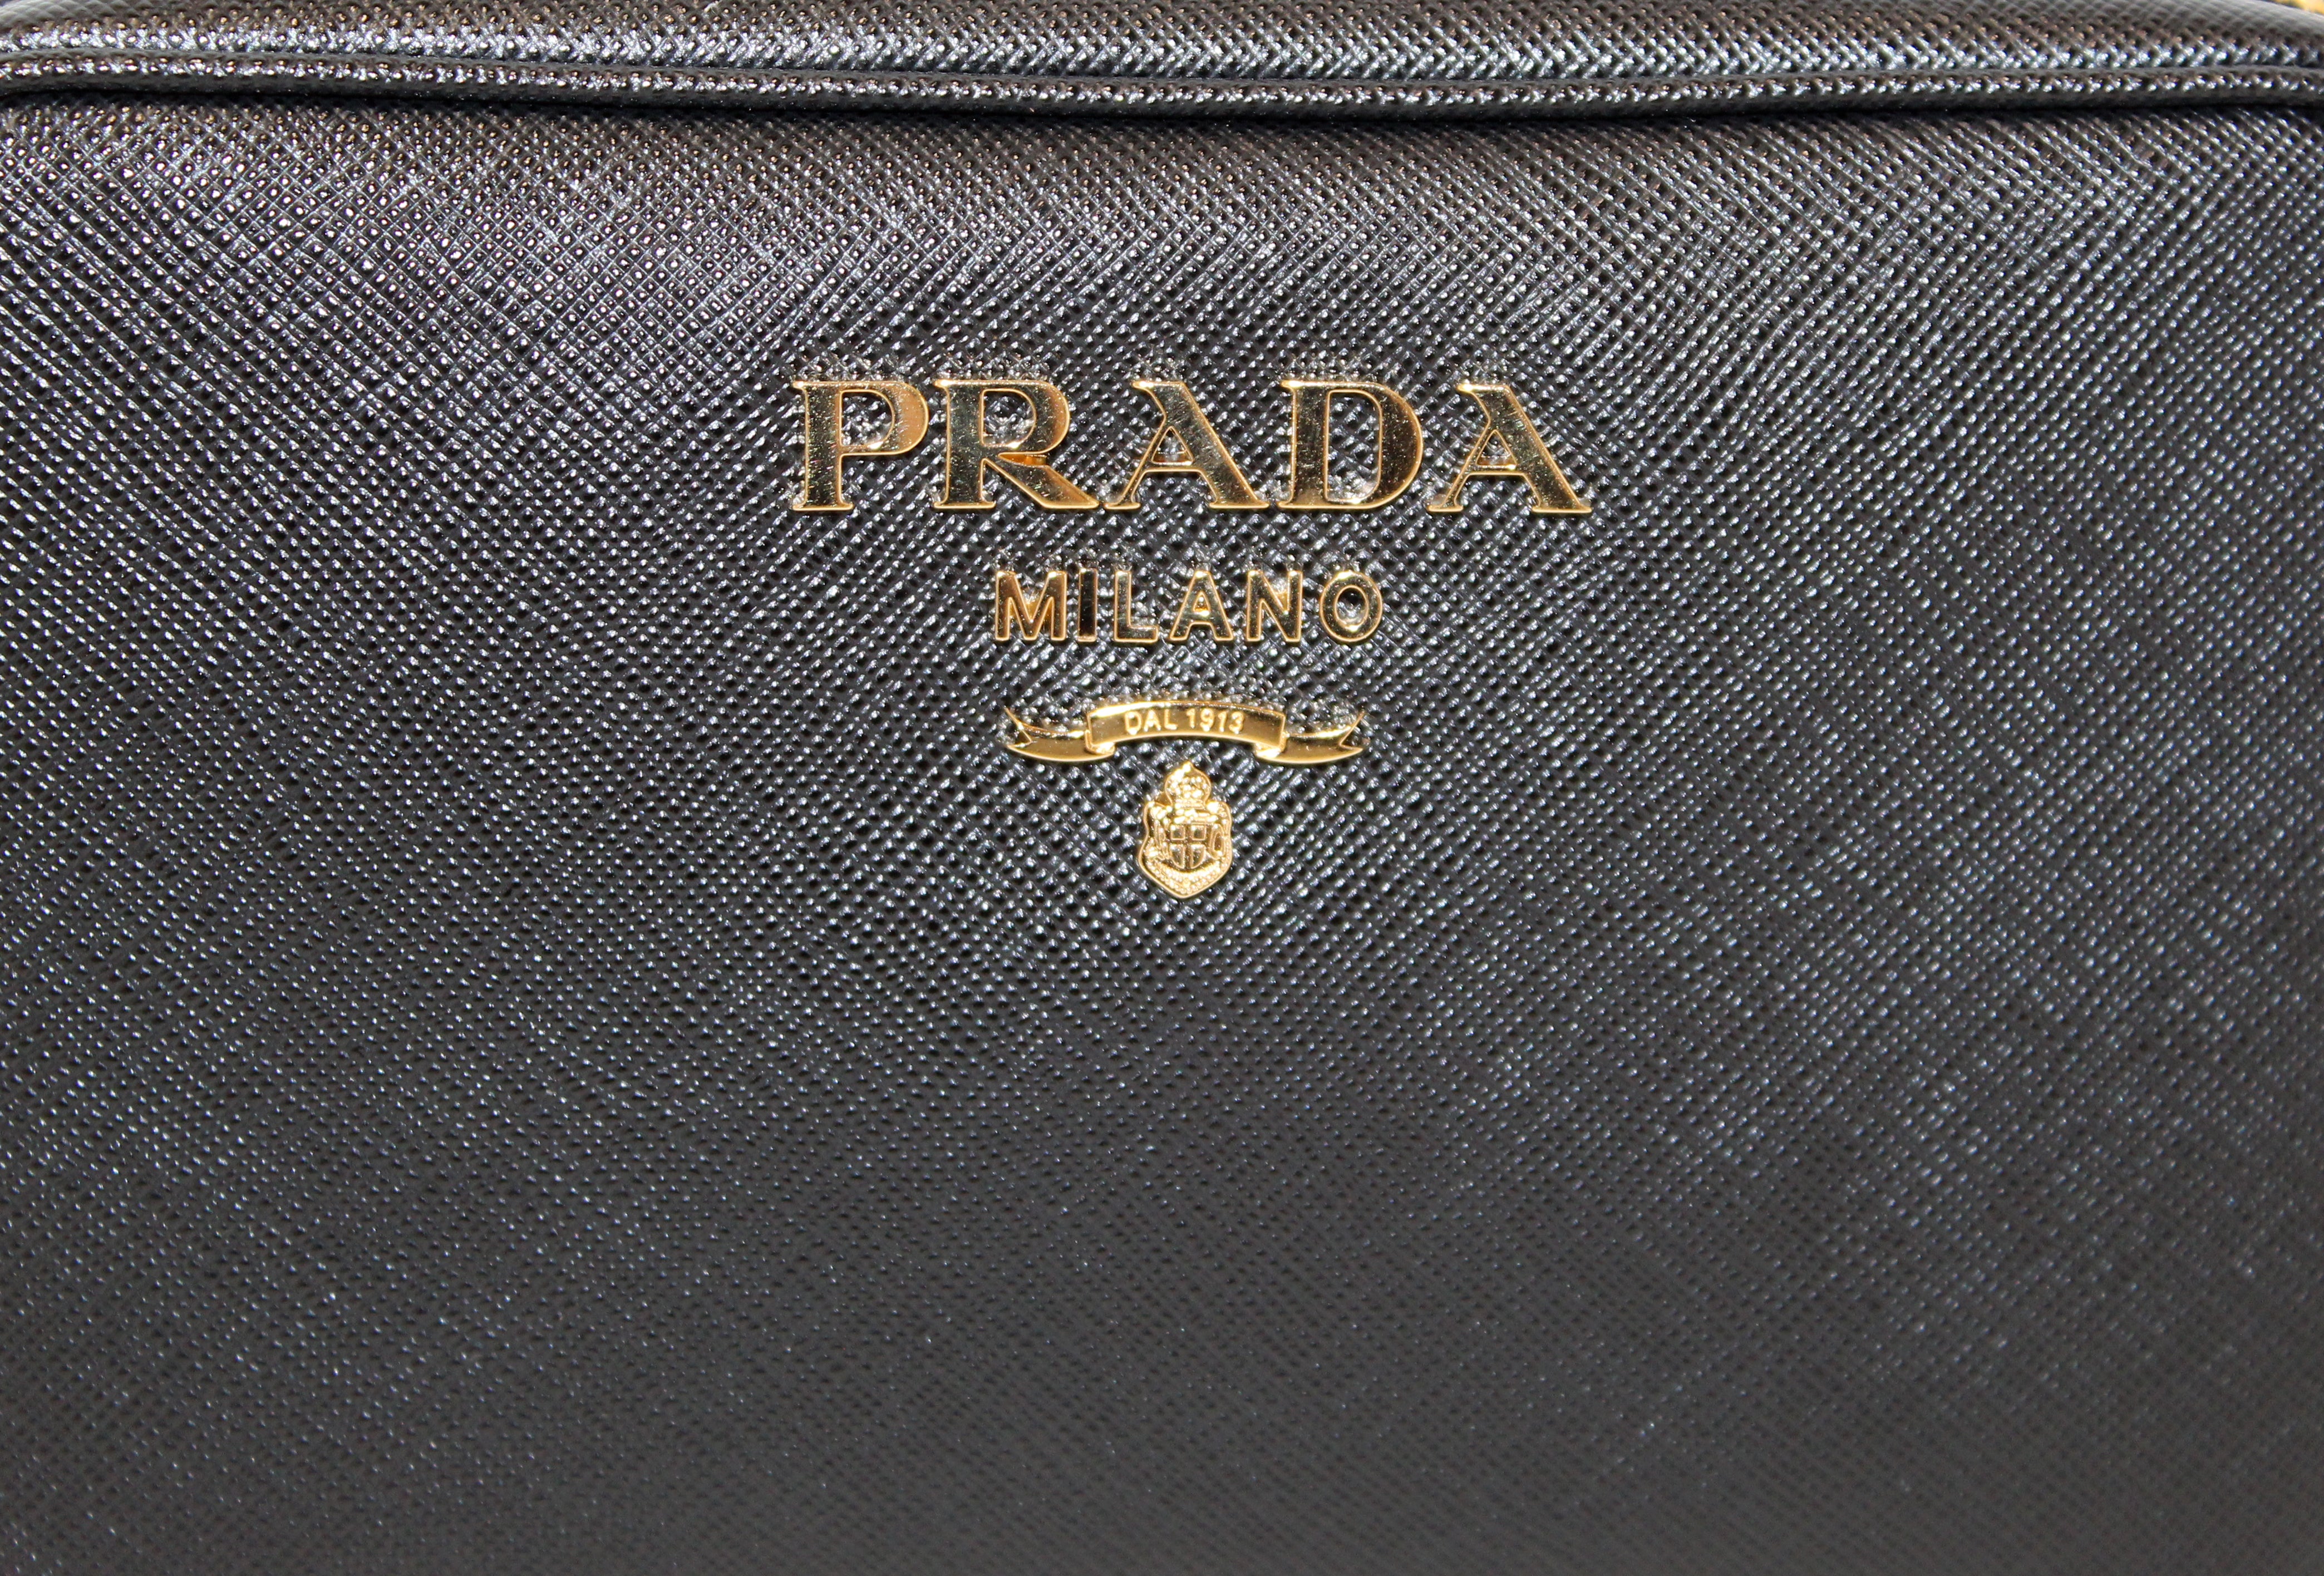 Authentic NEW Prada Black Saffiano Leather Bandoliera Camera Messenger Bag